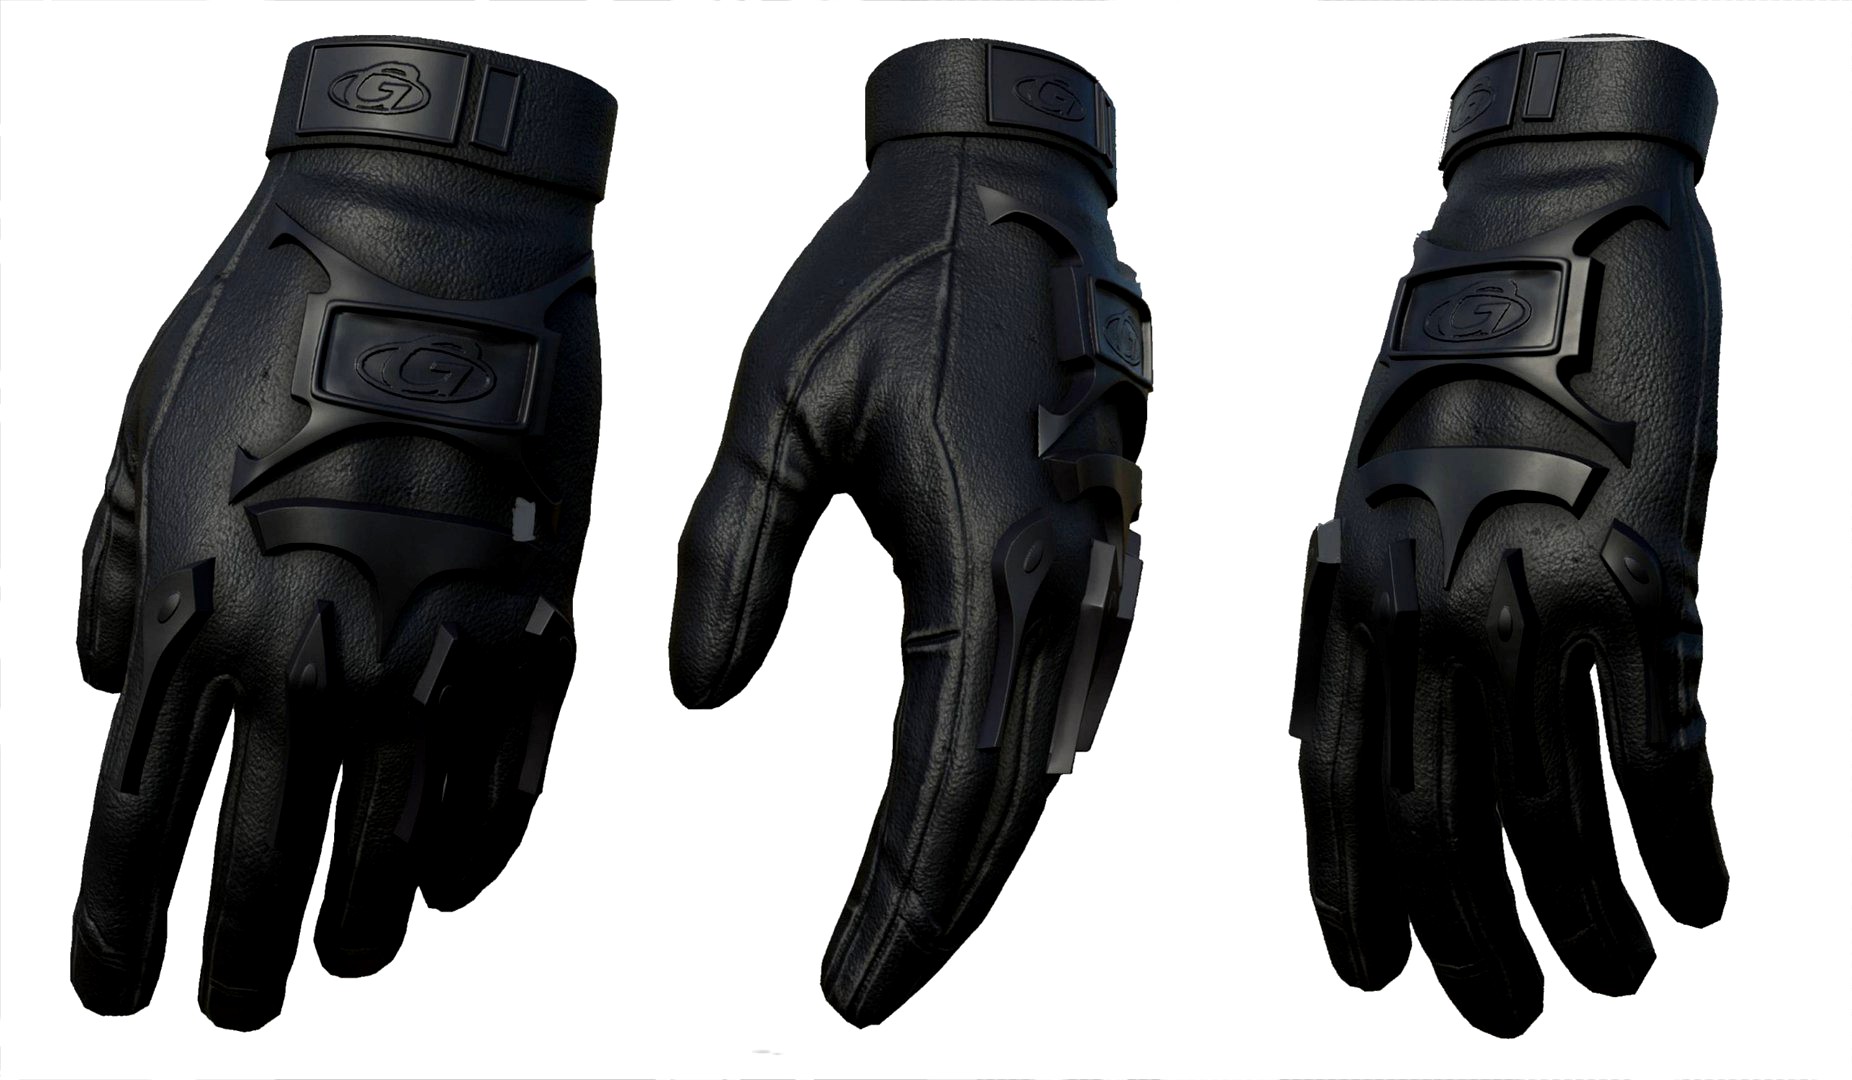 Gloves military combat soldier armor scifi fantasy